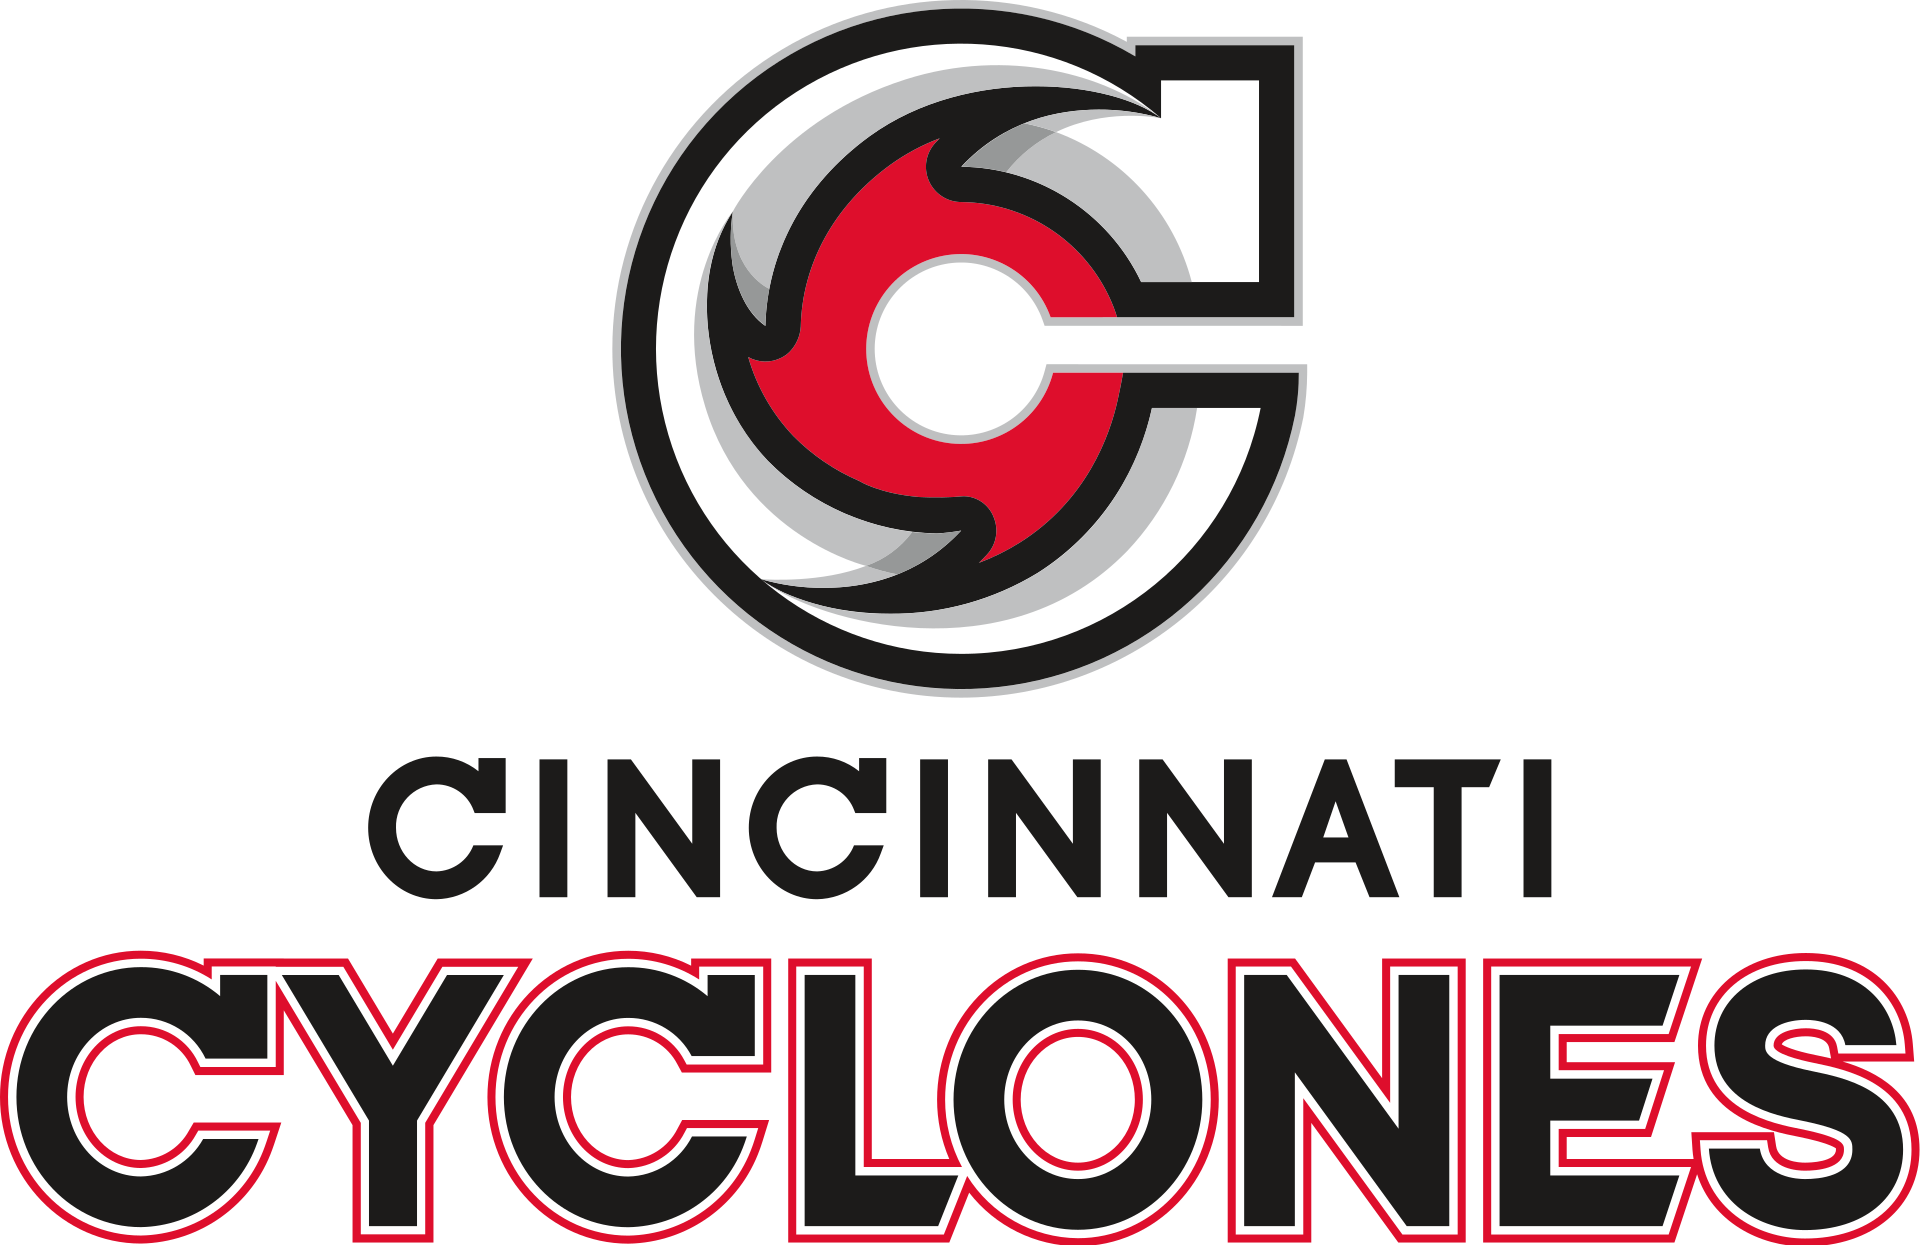 Cincinnati Cyclones